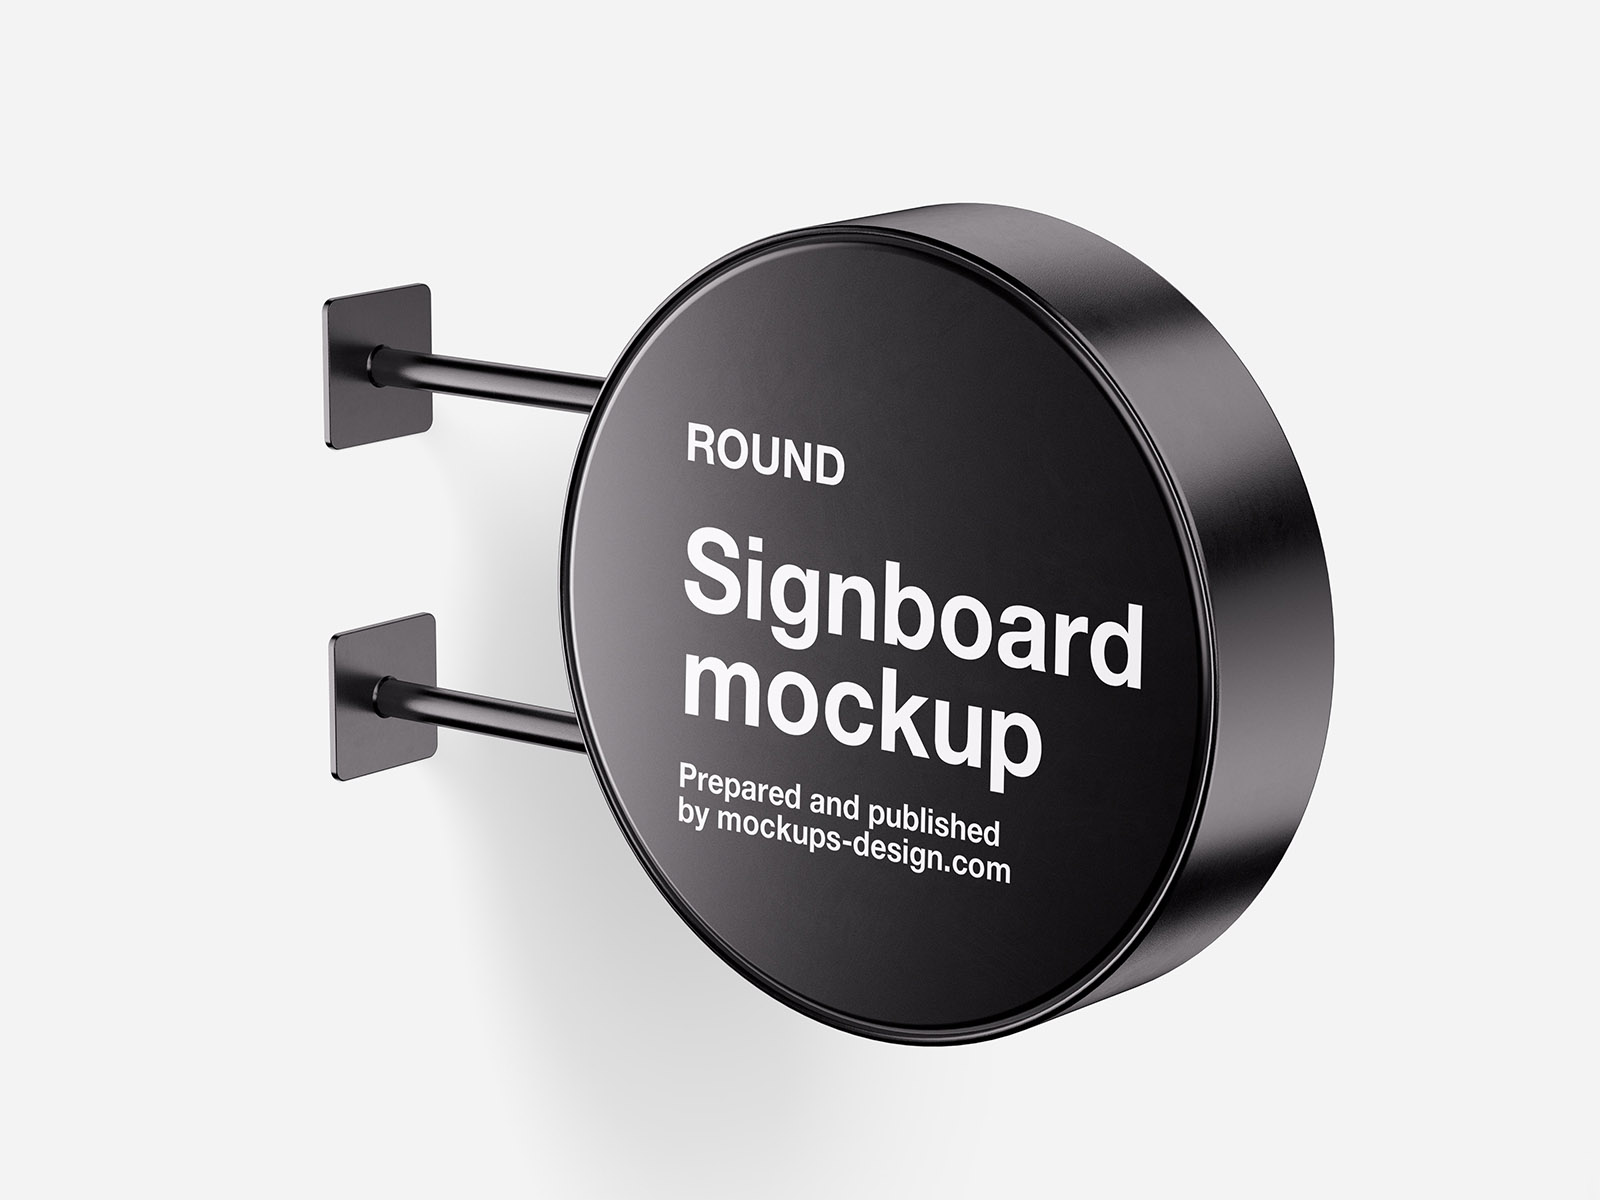 Round signboard mockup